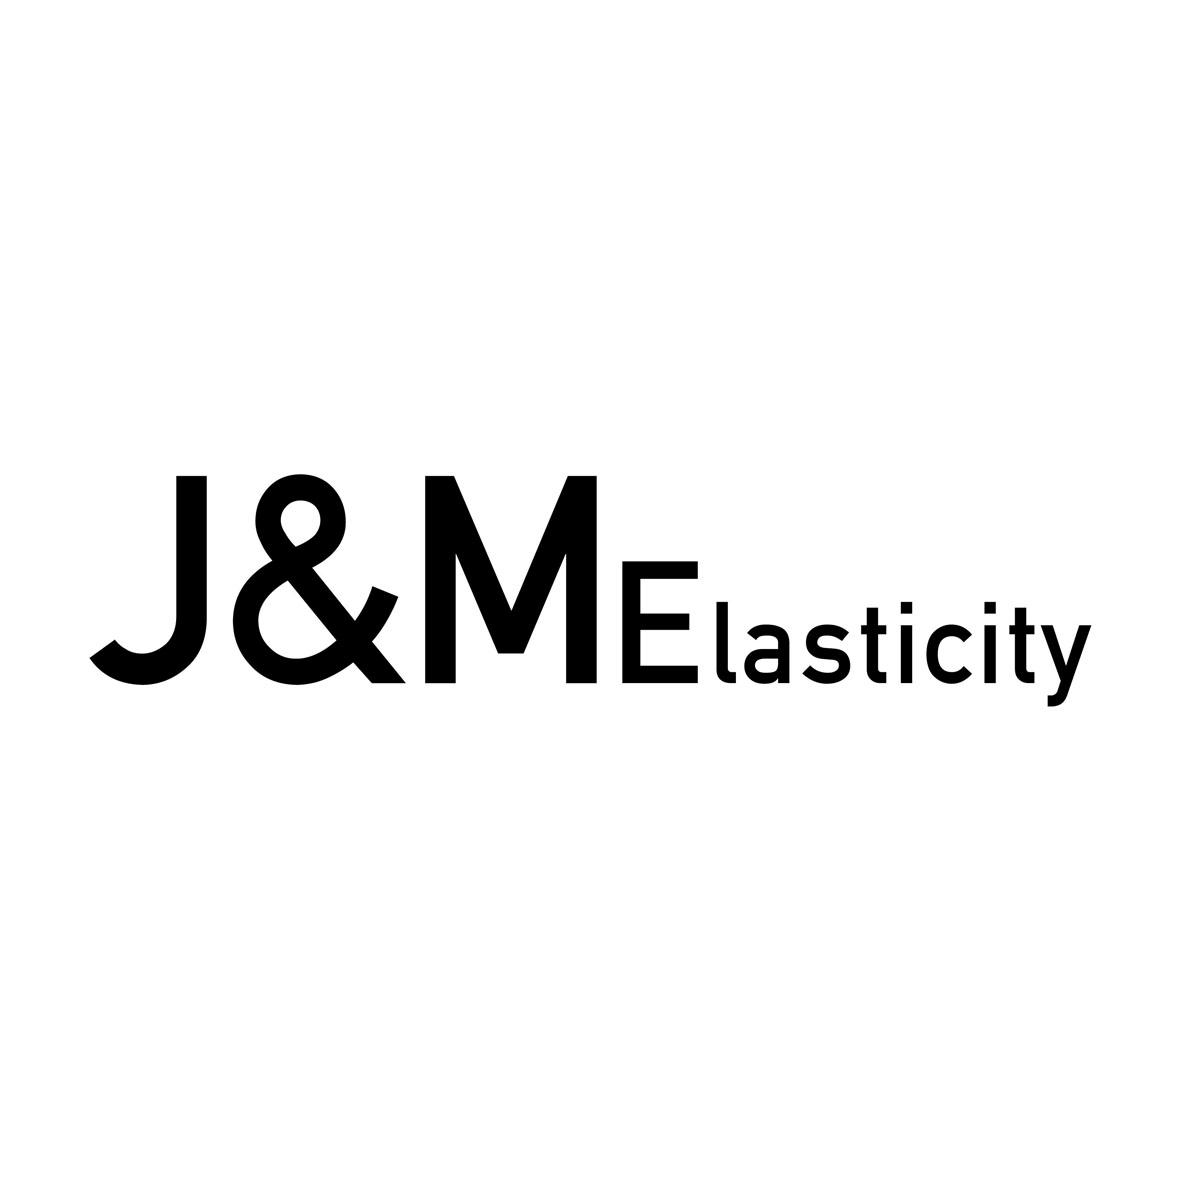 j&melasticity